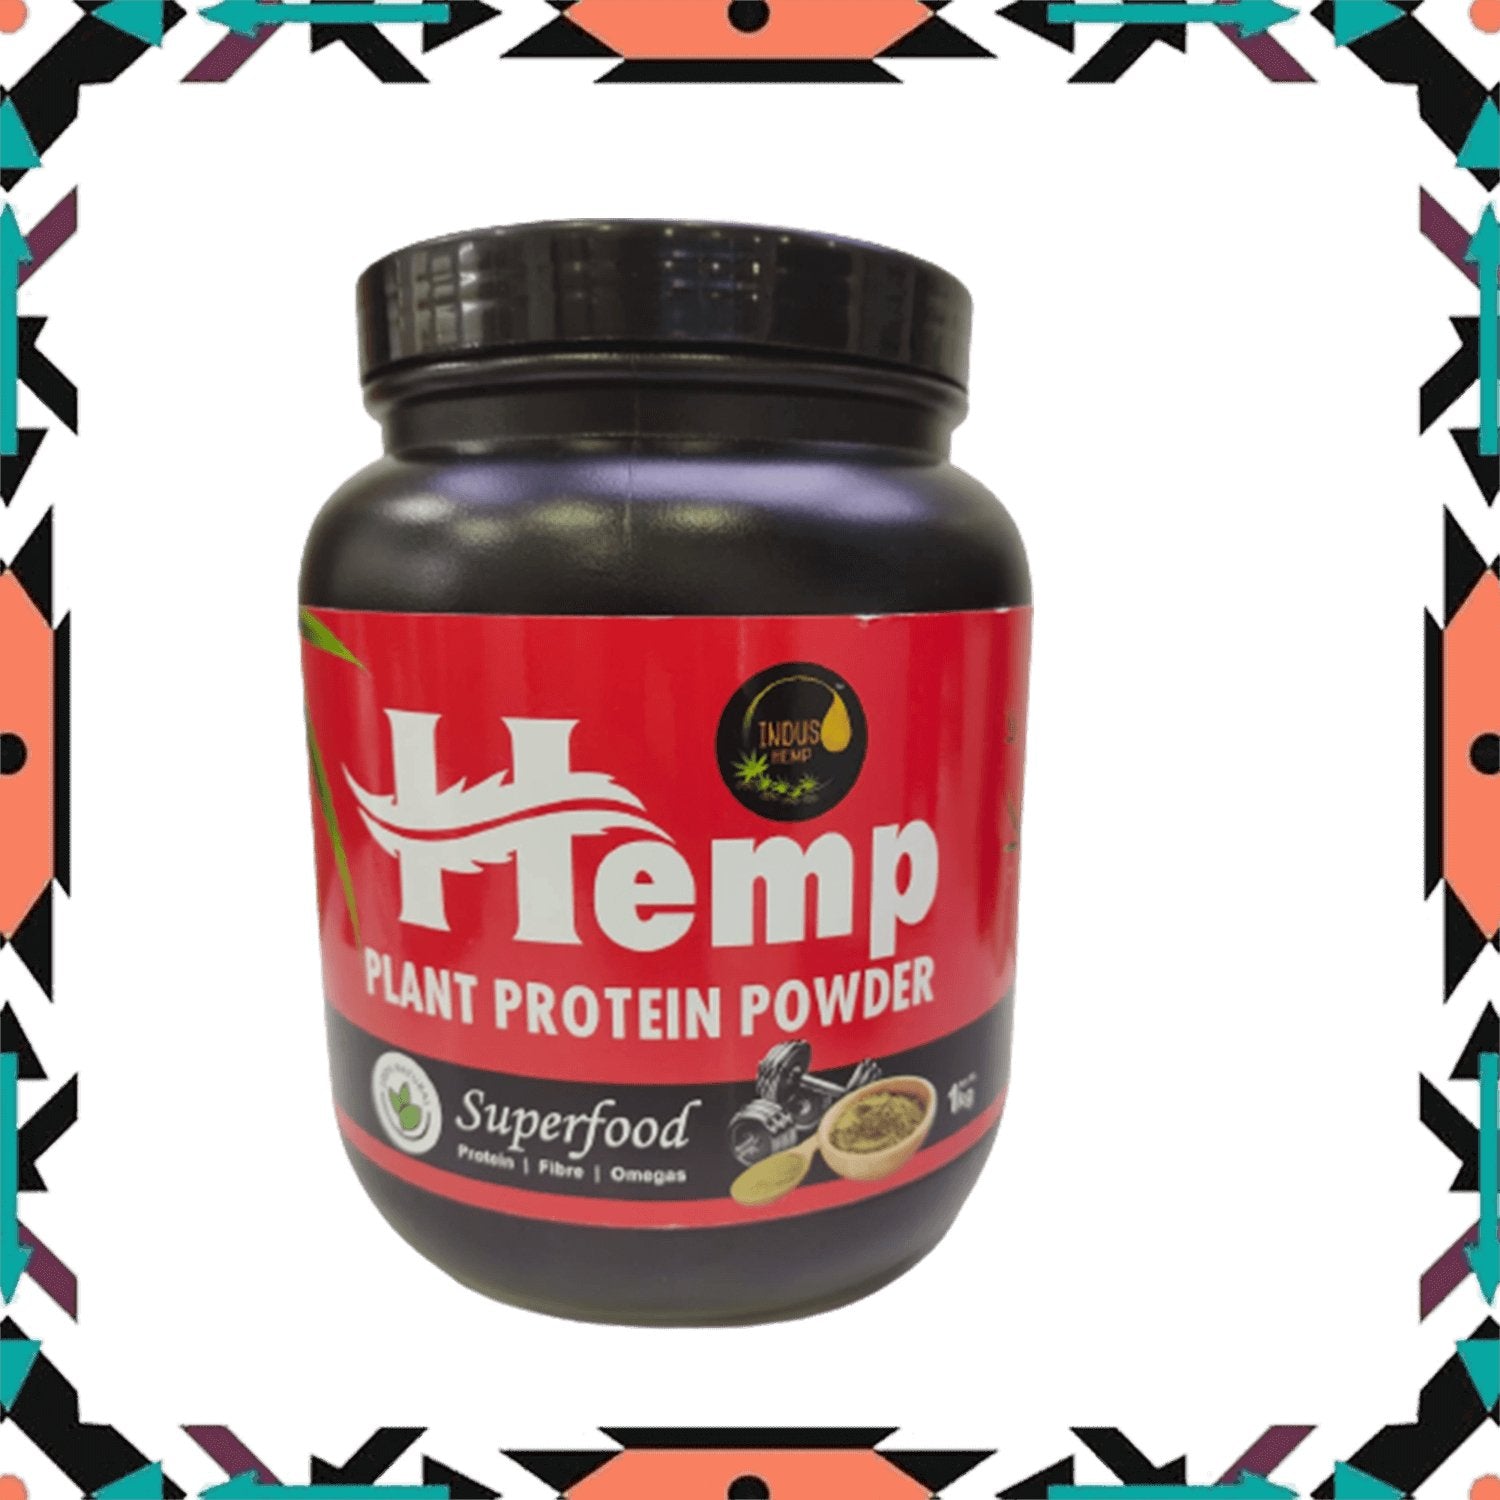 Indus Hemp - Hemp Protein Powder 500gms/1KG/2KG - CBD Store India